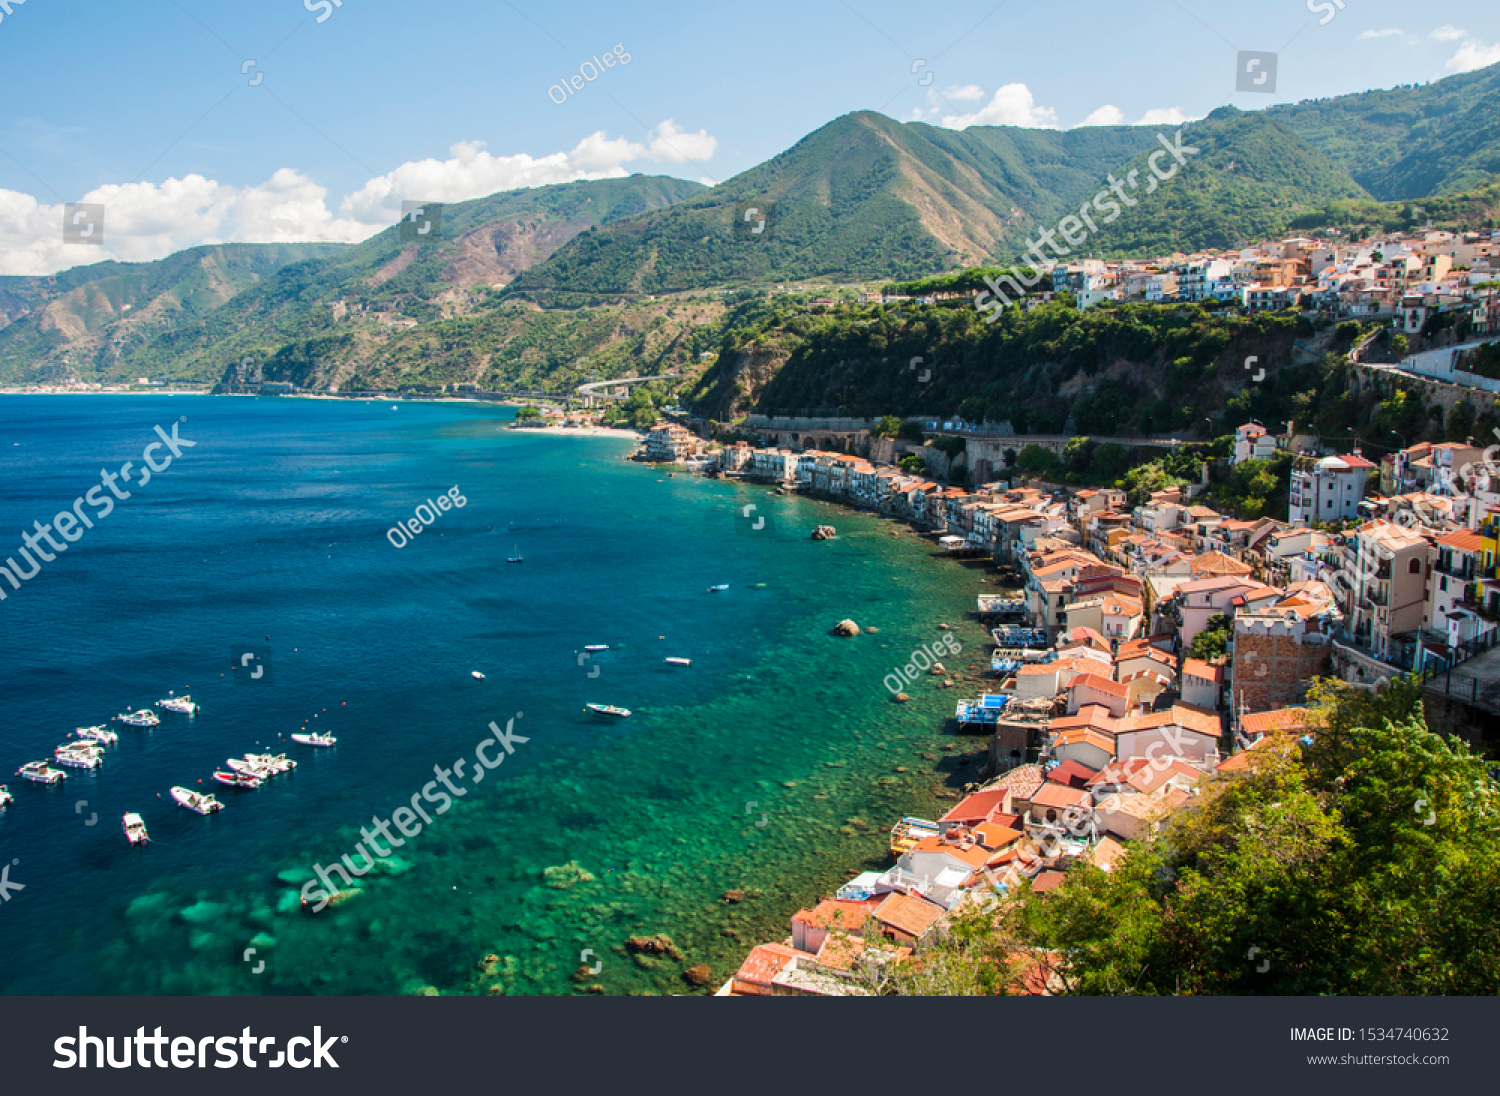 Italy Calabria region Scilla town Tyrrhenian sea #1534740632